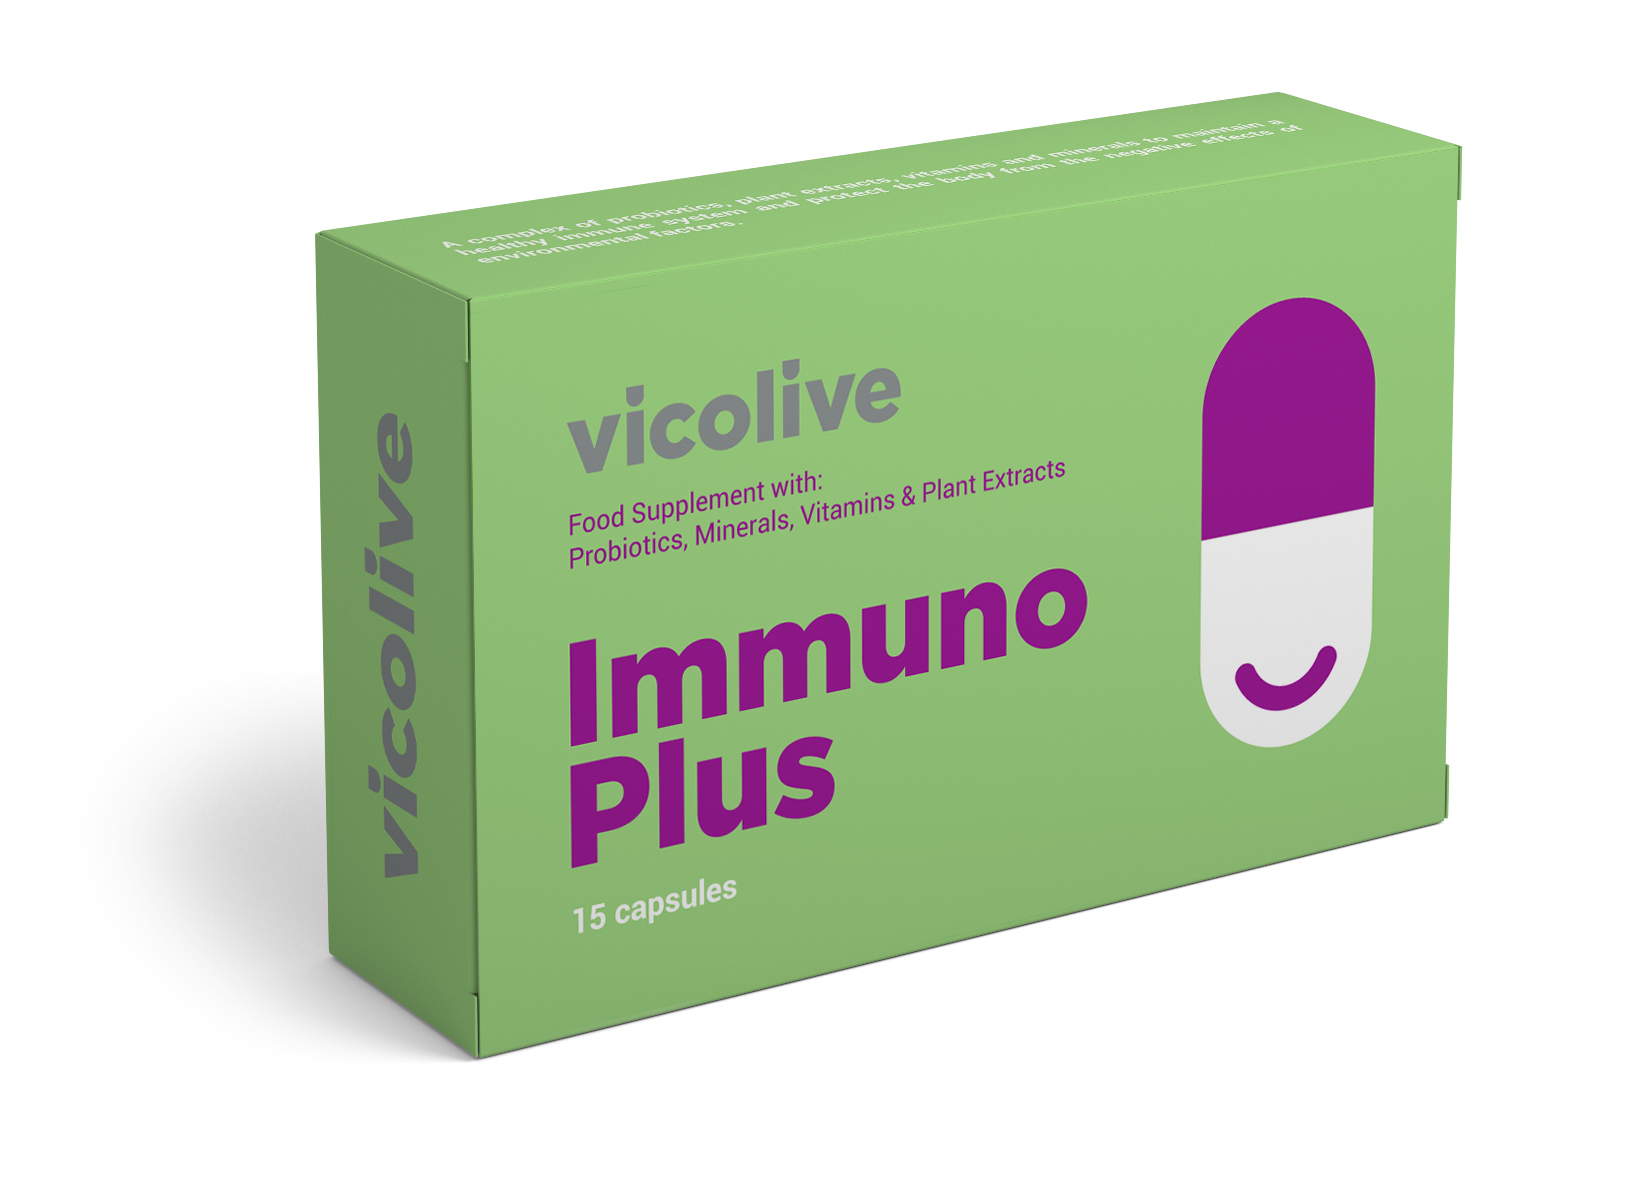 Vicolive пробиотик. Vicolive Immuno Plus. Мульти пробиотик vicolive. Комплекс для иммунитета Виколайф vicolive Immuno Plus капс 15 шт.